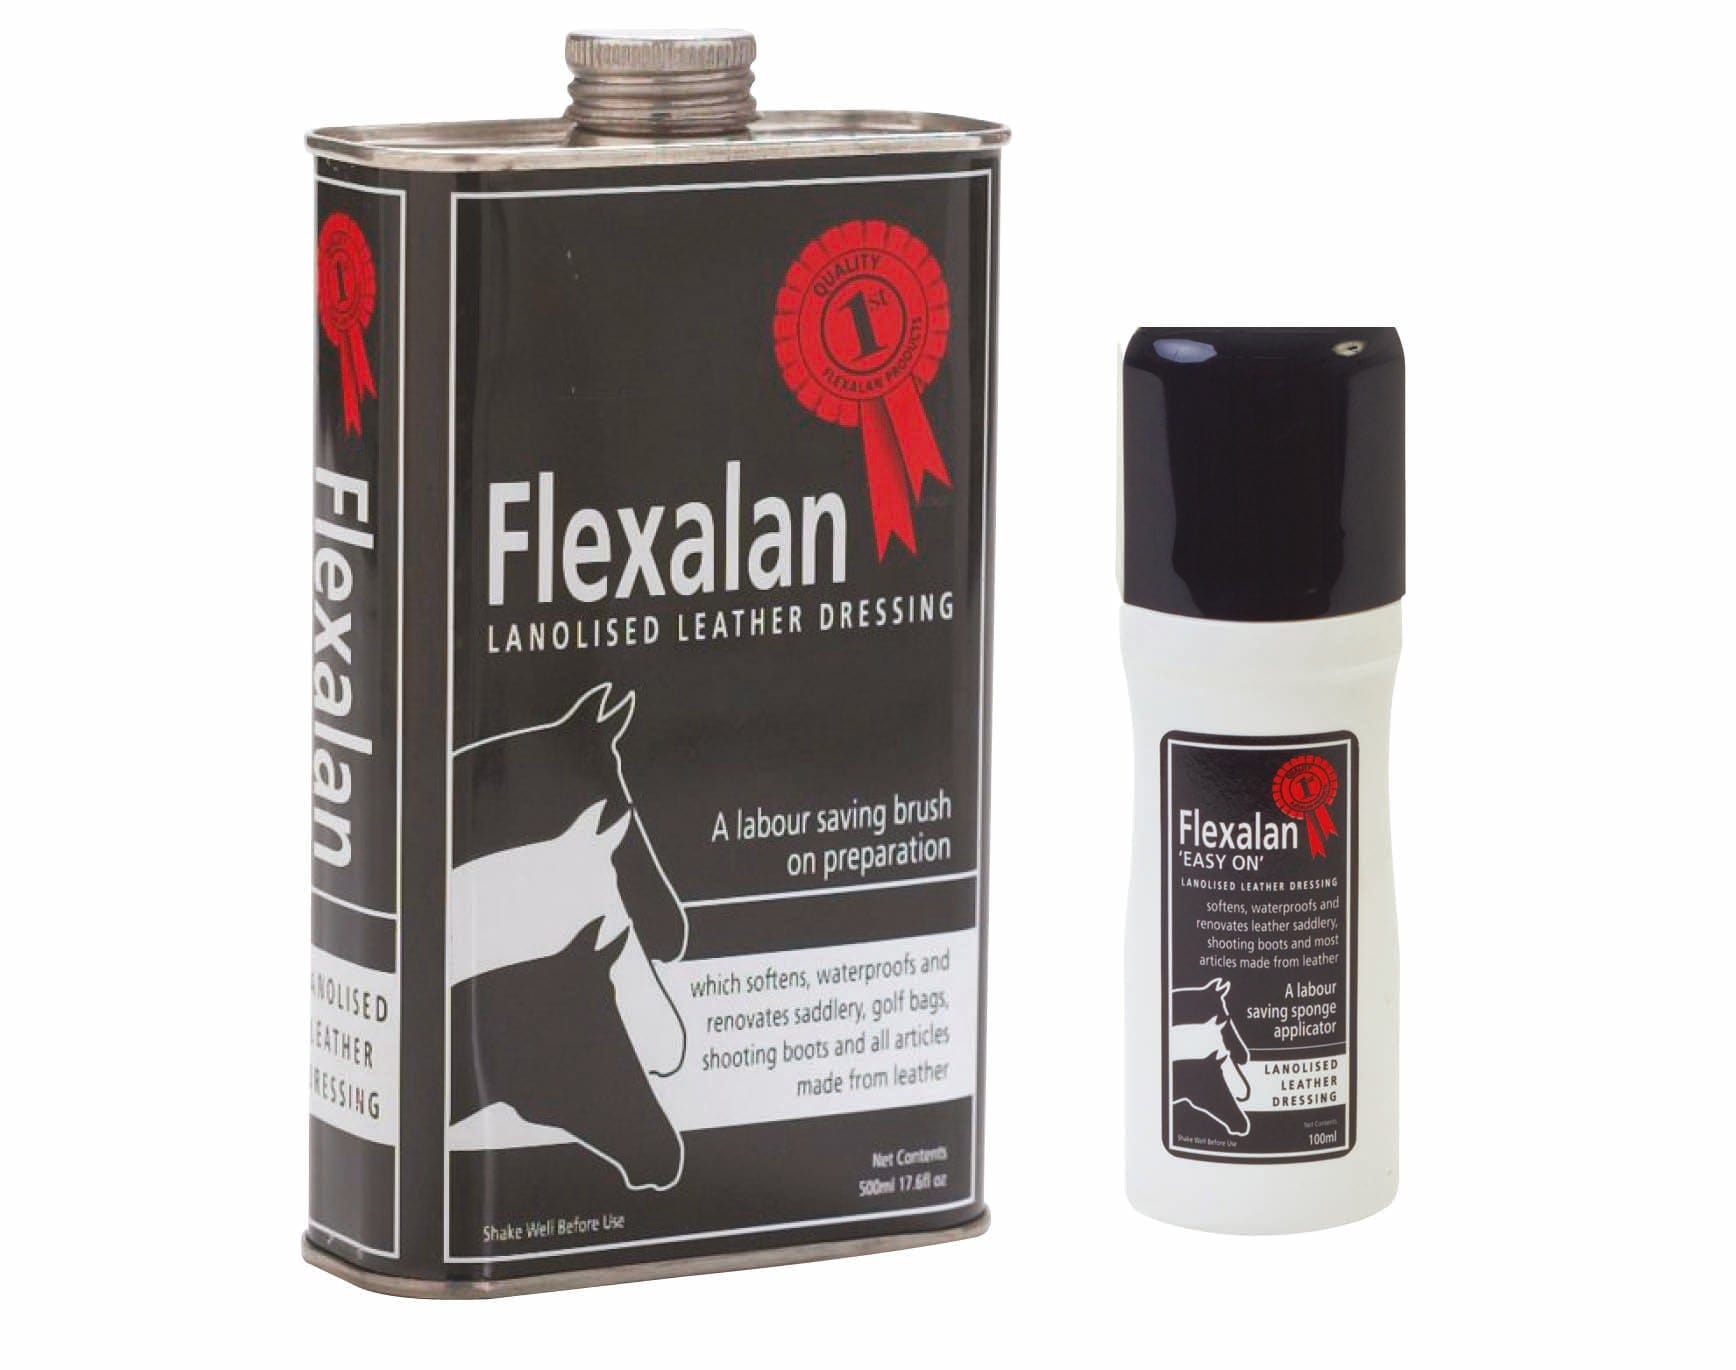 Flexalan lanolised leather dressing